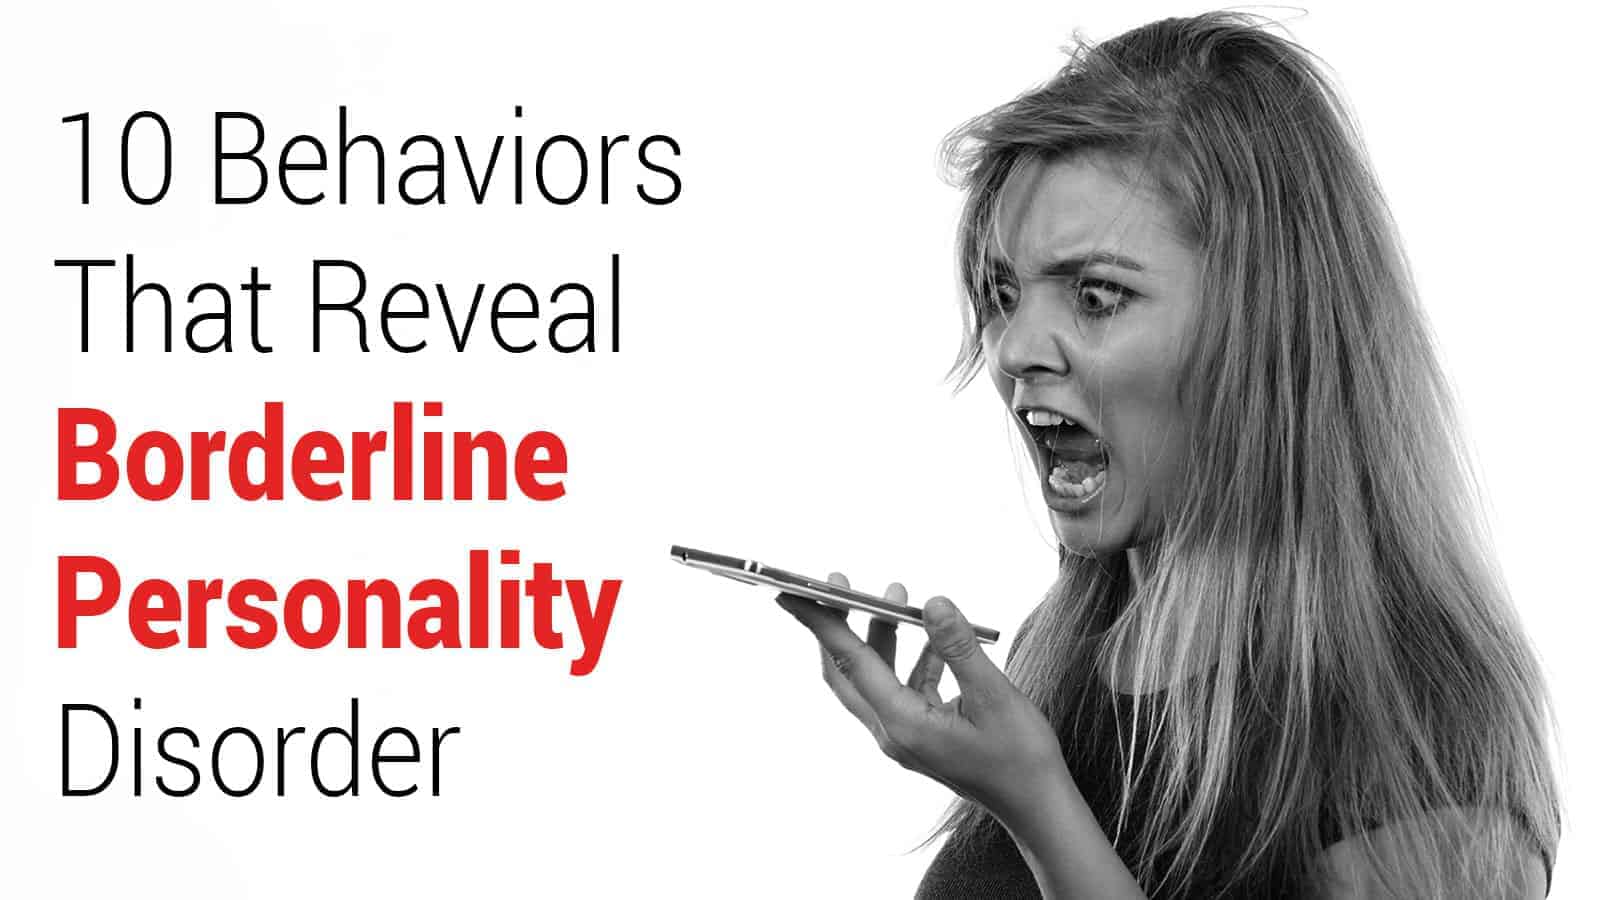 10 Behaviors That Reveal Borderline Personality Disorder